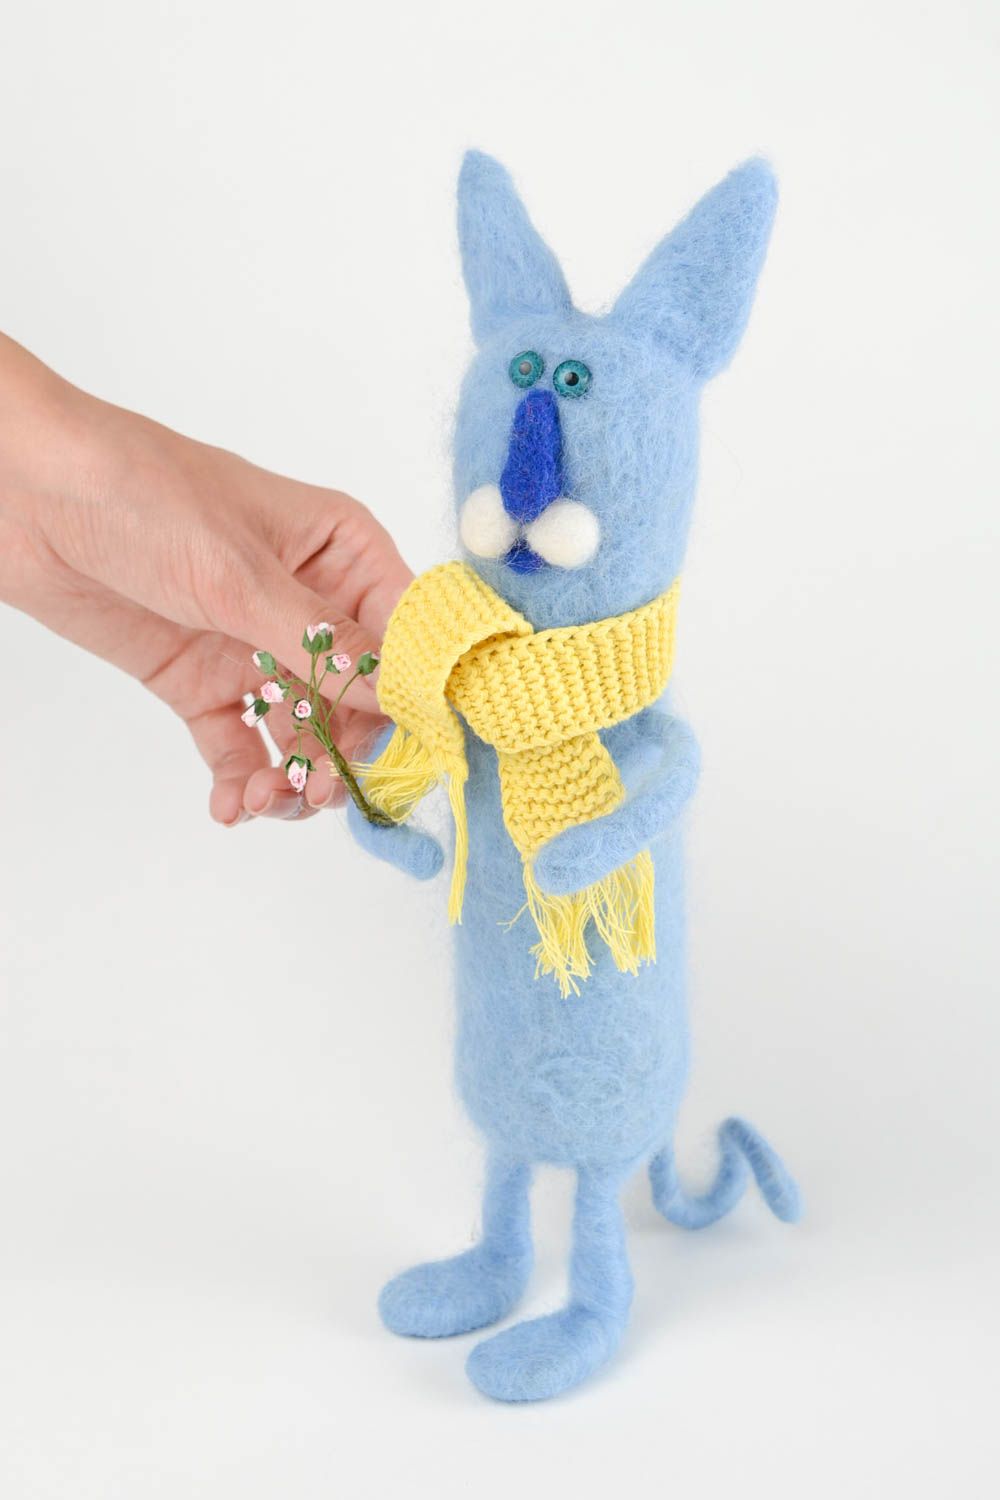 Handmade felt toy soft toy cat figurine stuffed animal home decor gifts for kids photo 2